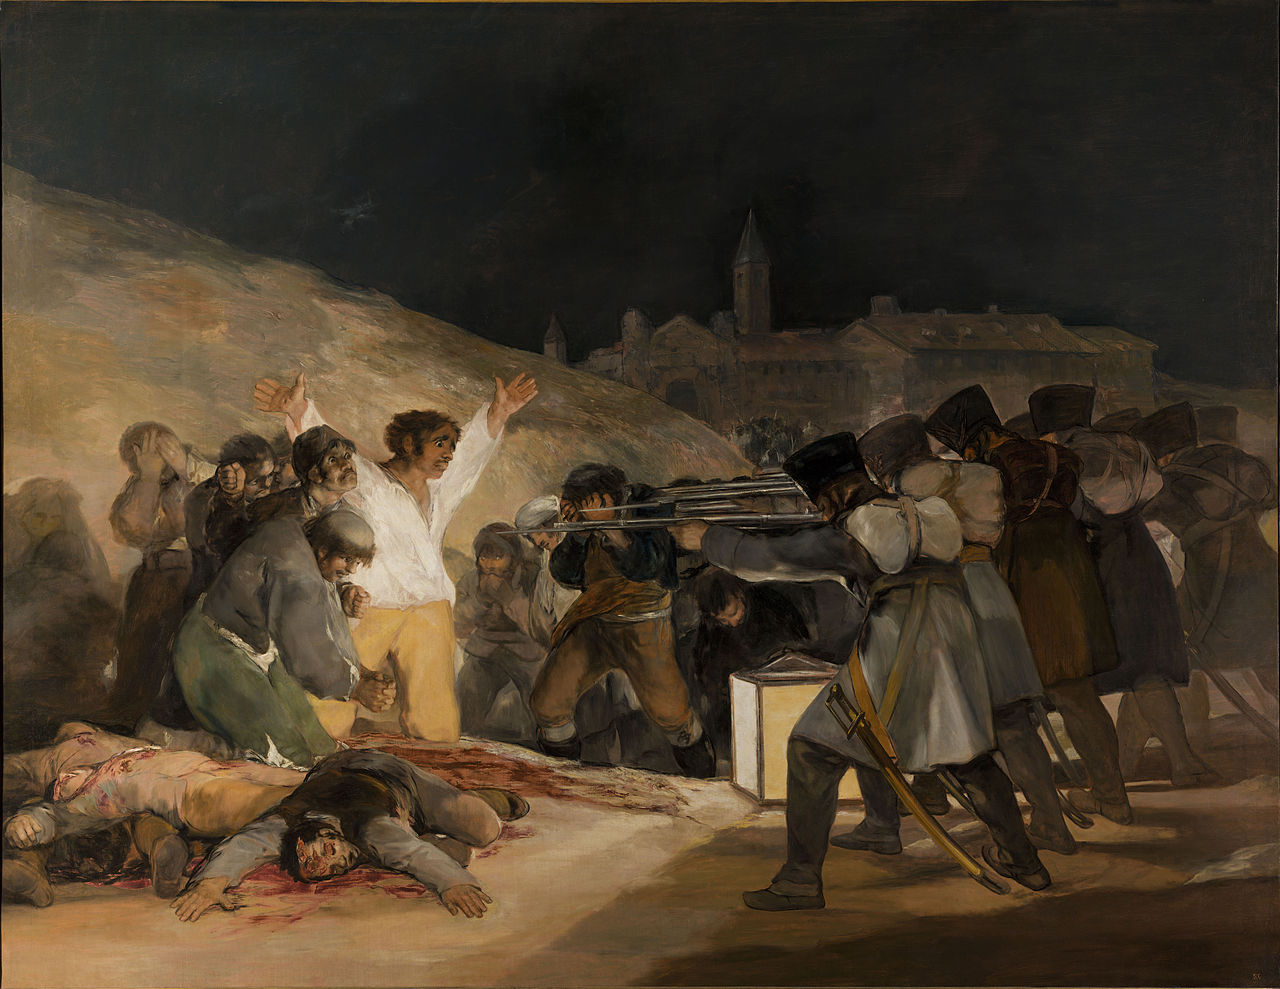 The Third of May 1808 by Francisco Goya - 1814 - 268 cm × 347 cm Museo del Prado